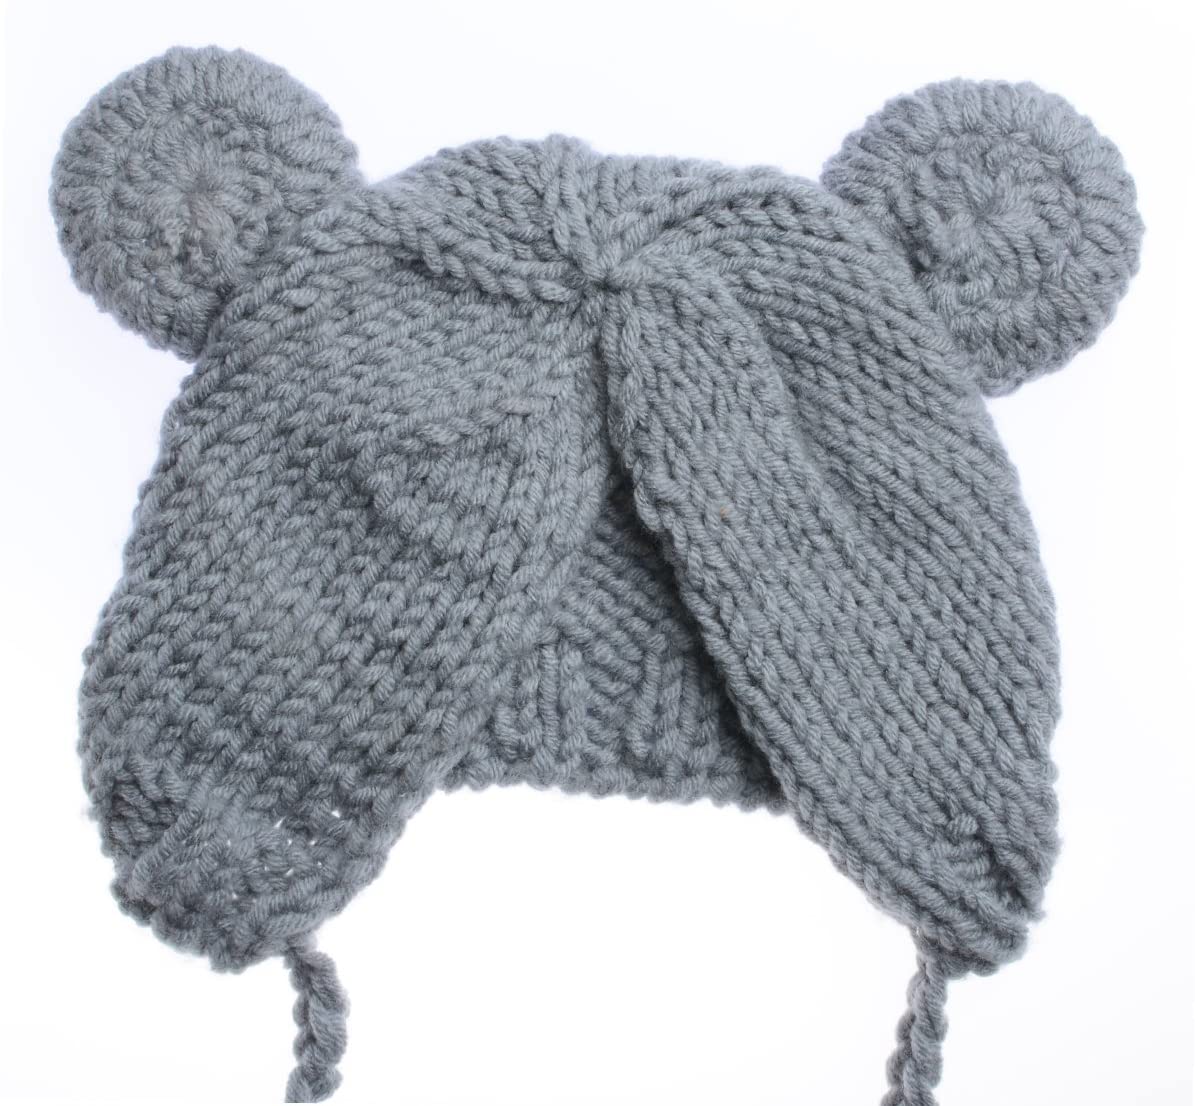 5 Little Monsters: Embellished Loom Knit Hats: Baby Bears